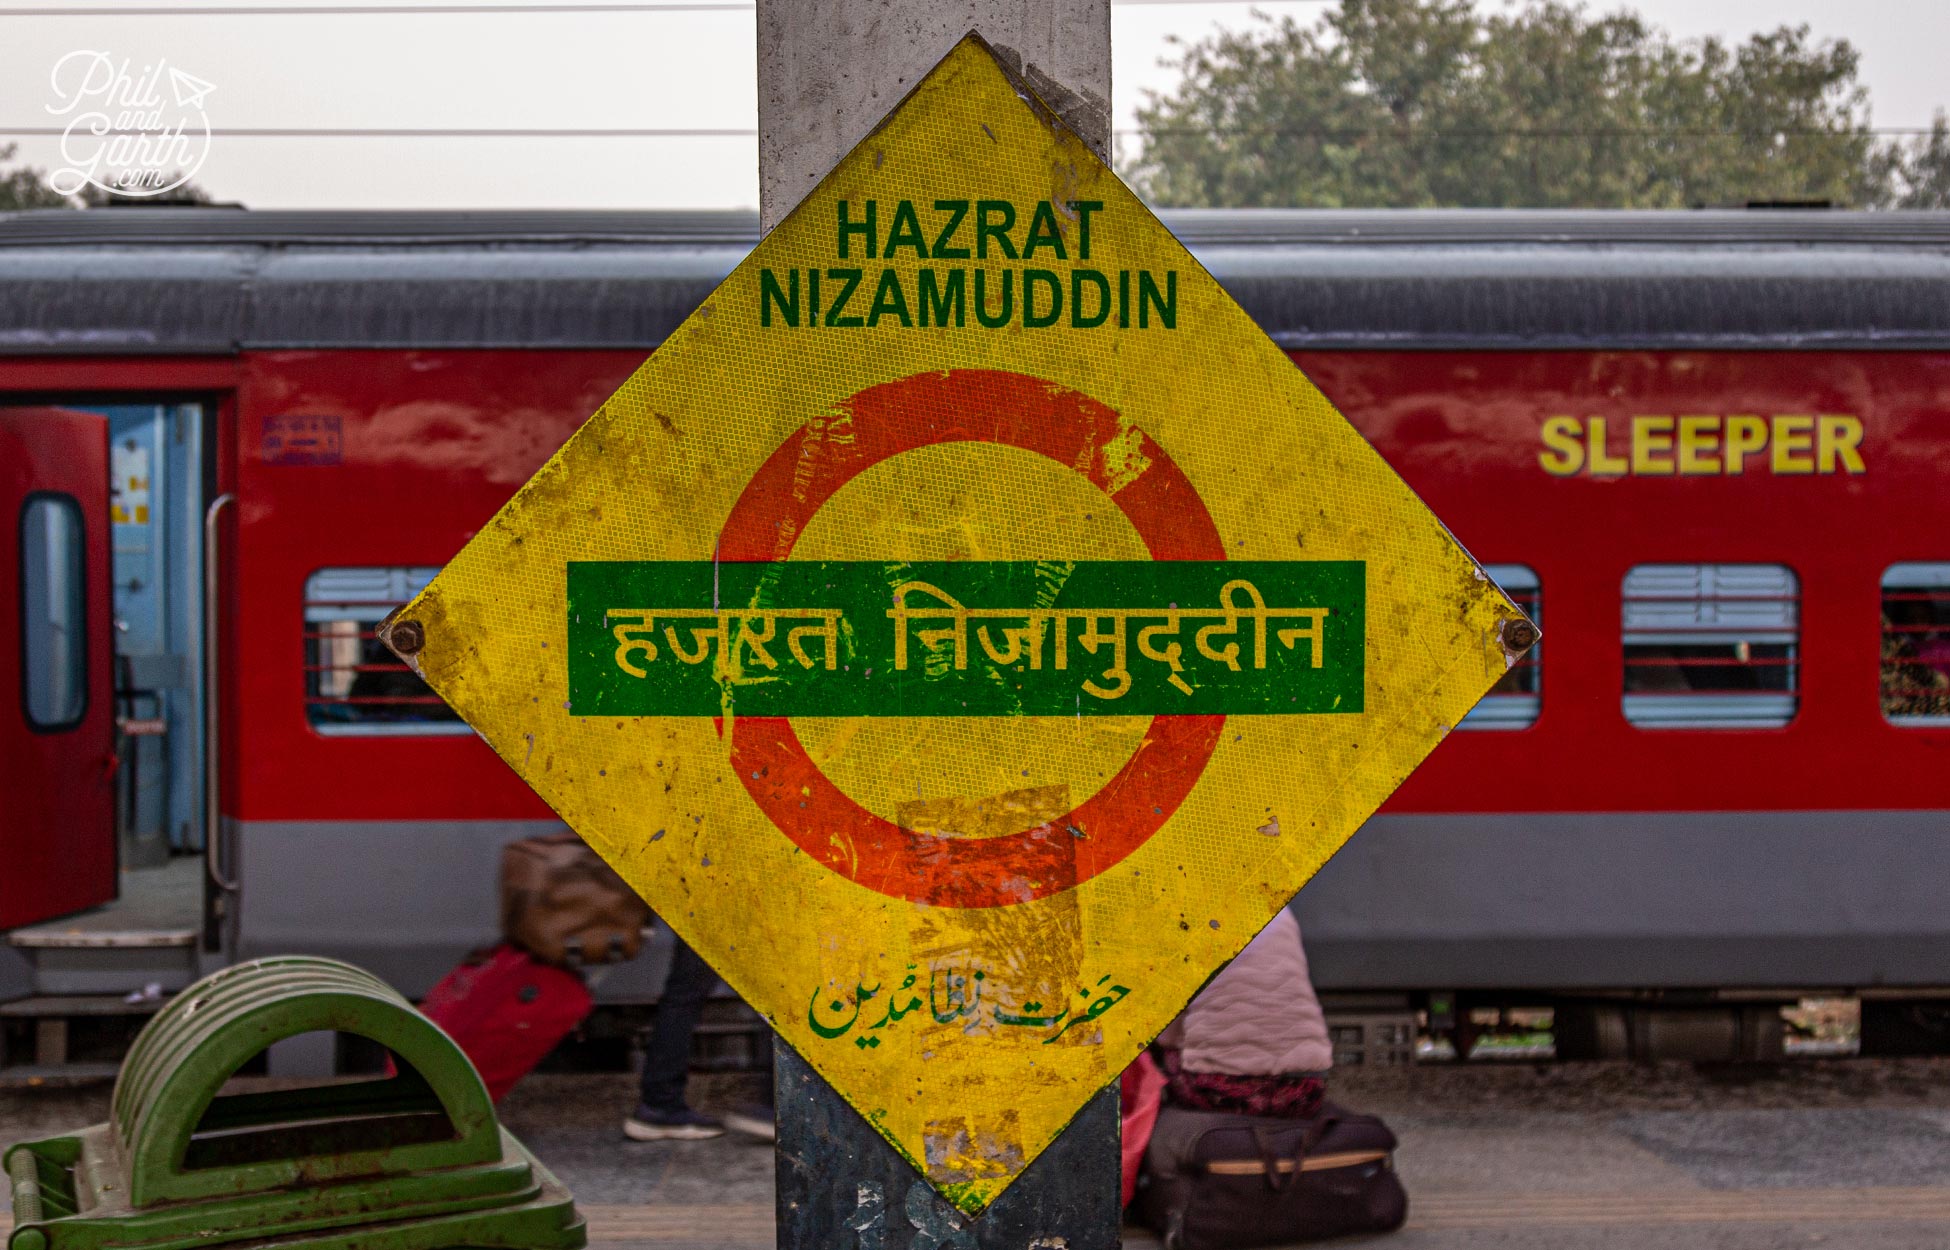 Hazrat Nizamuddin railway station sign